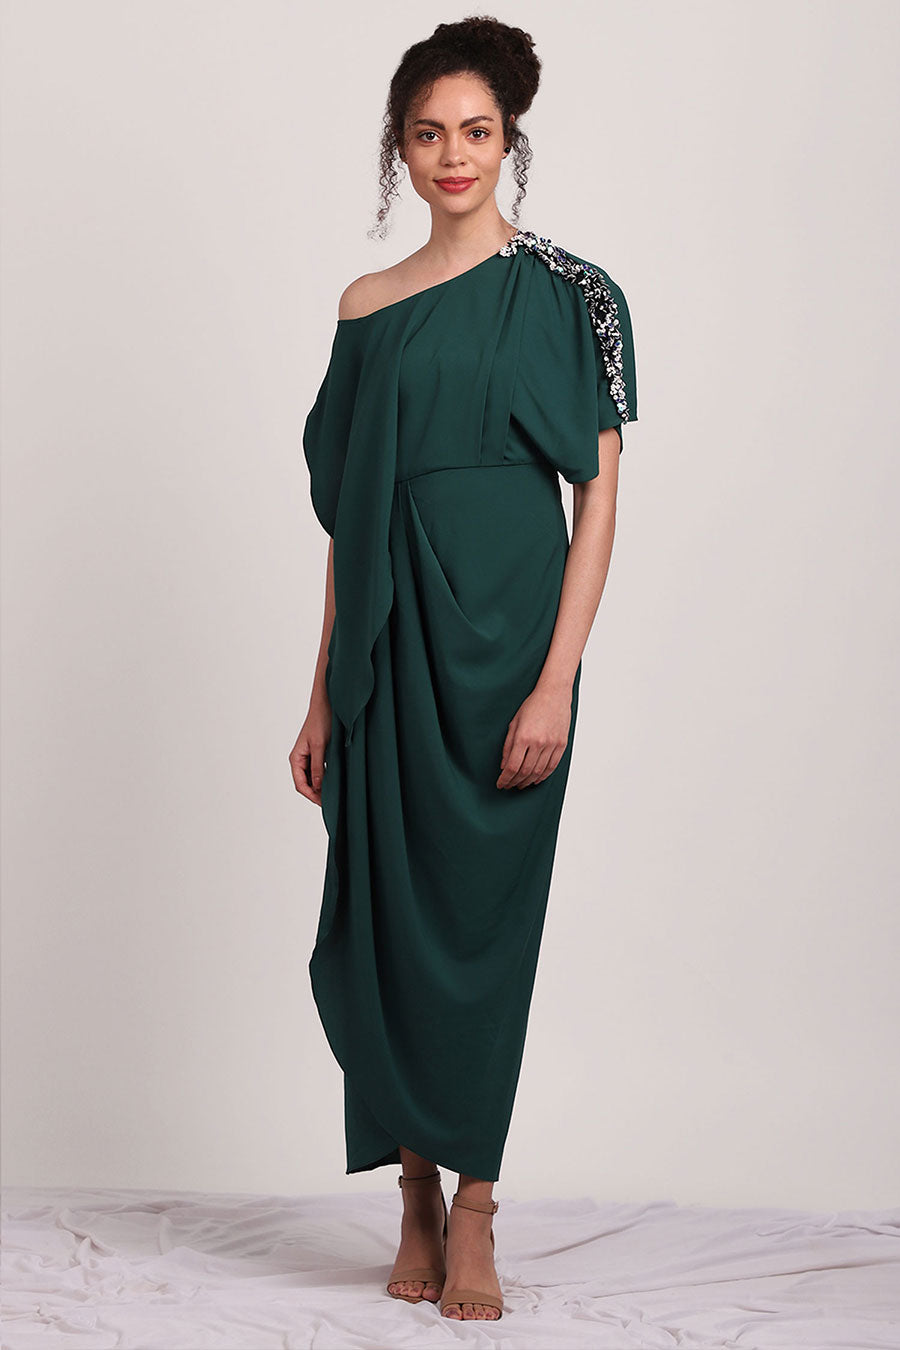 Metallic Fringe Green Drape Dress